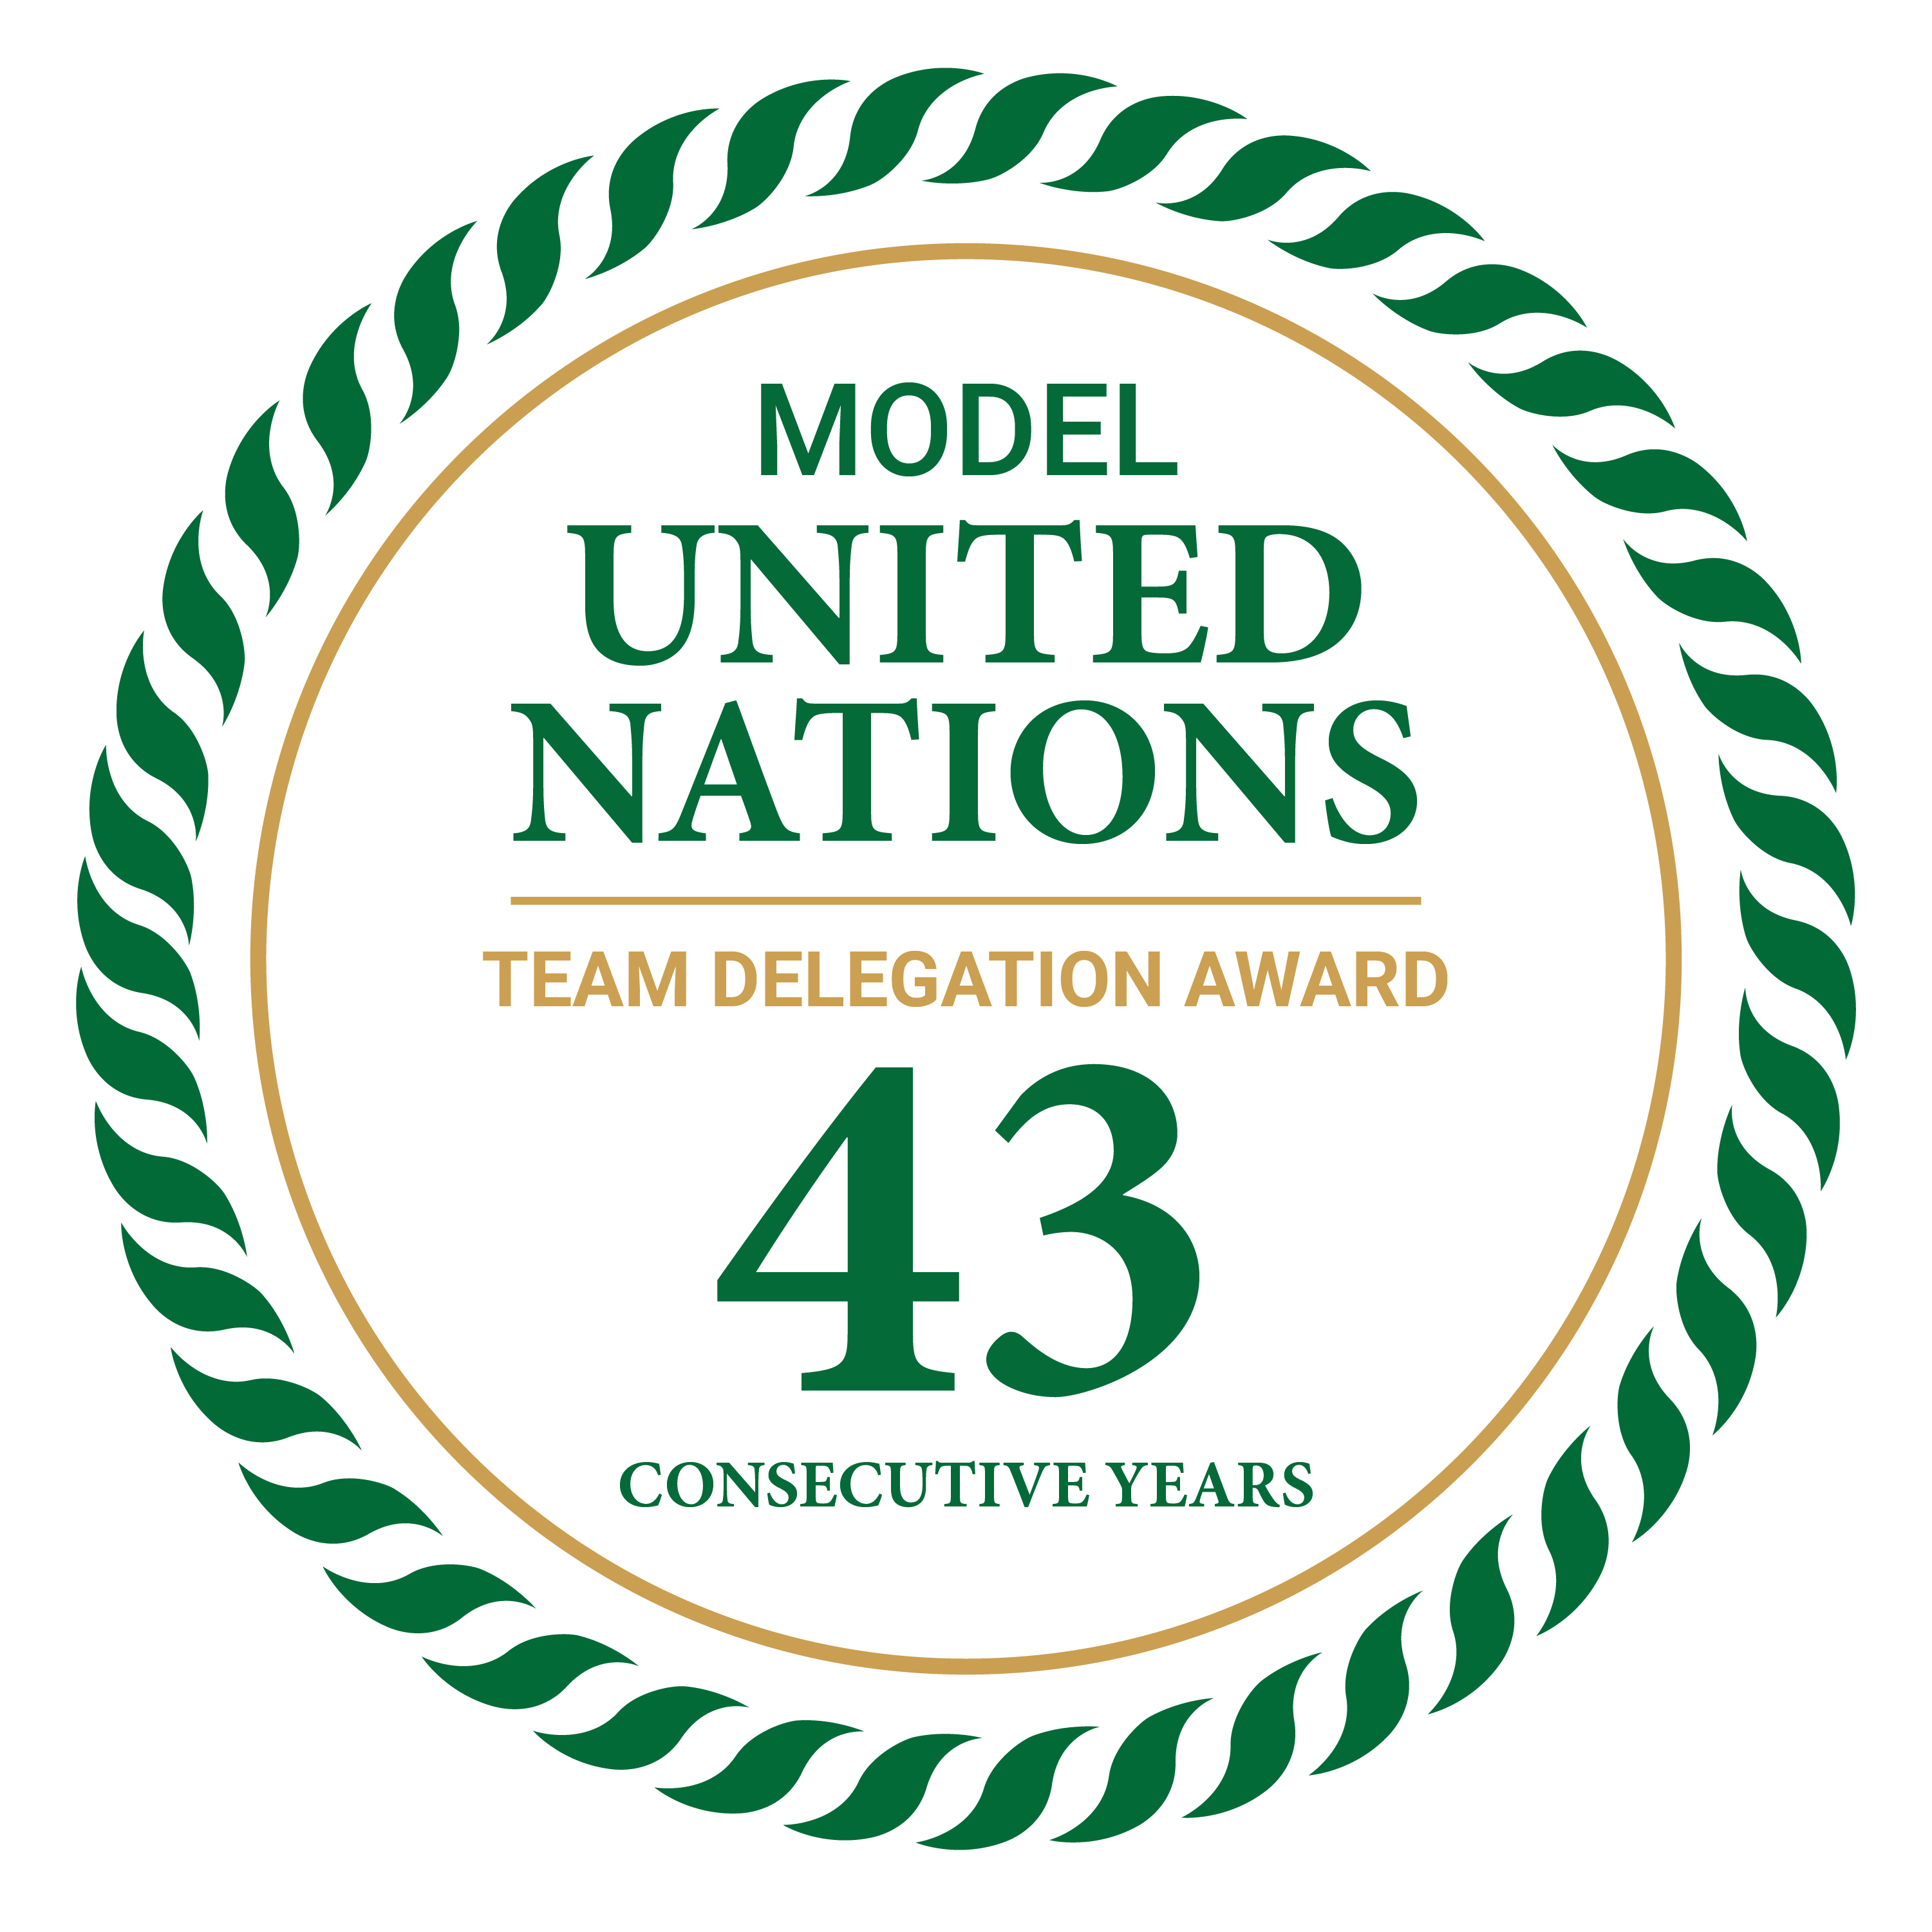 model united nations team delegation award 43 consecutive years